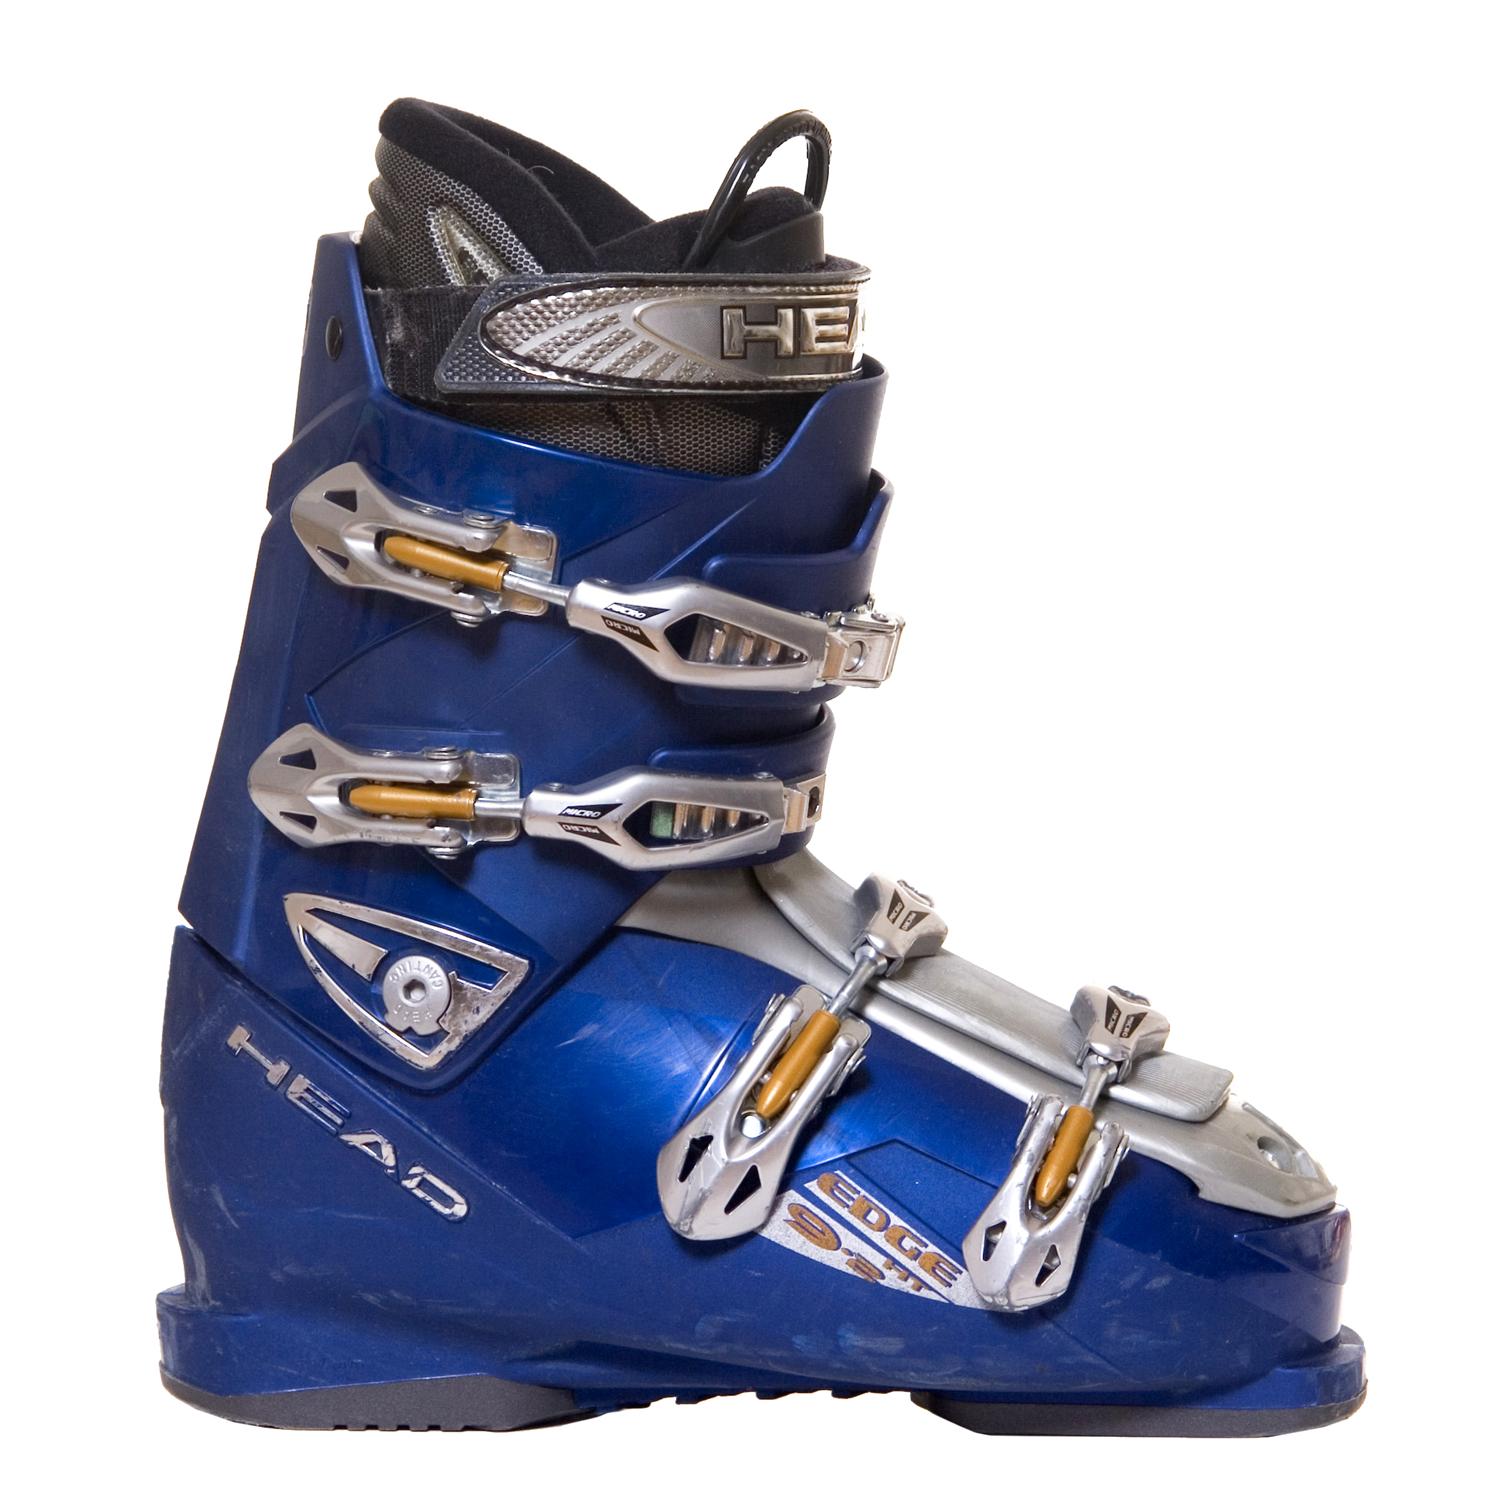 Head Edge 9.2 Ski Boots - Used 2006 | evo outlet